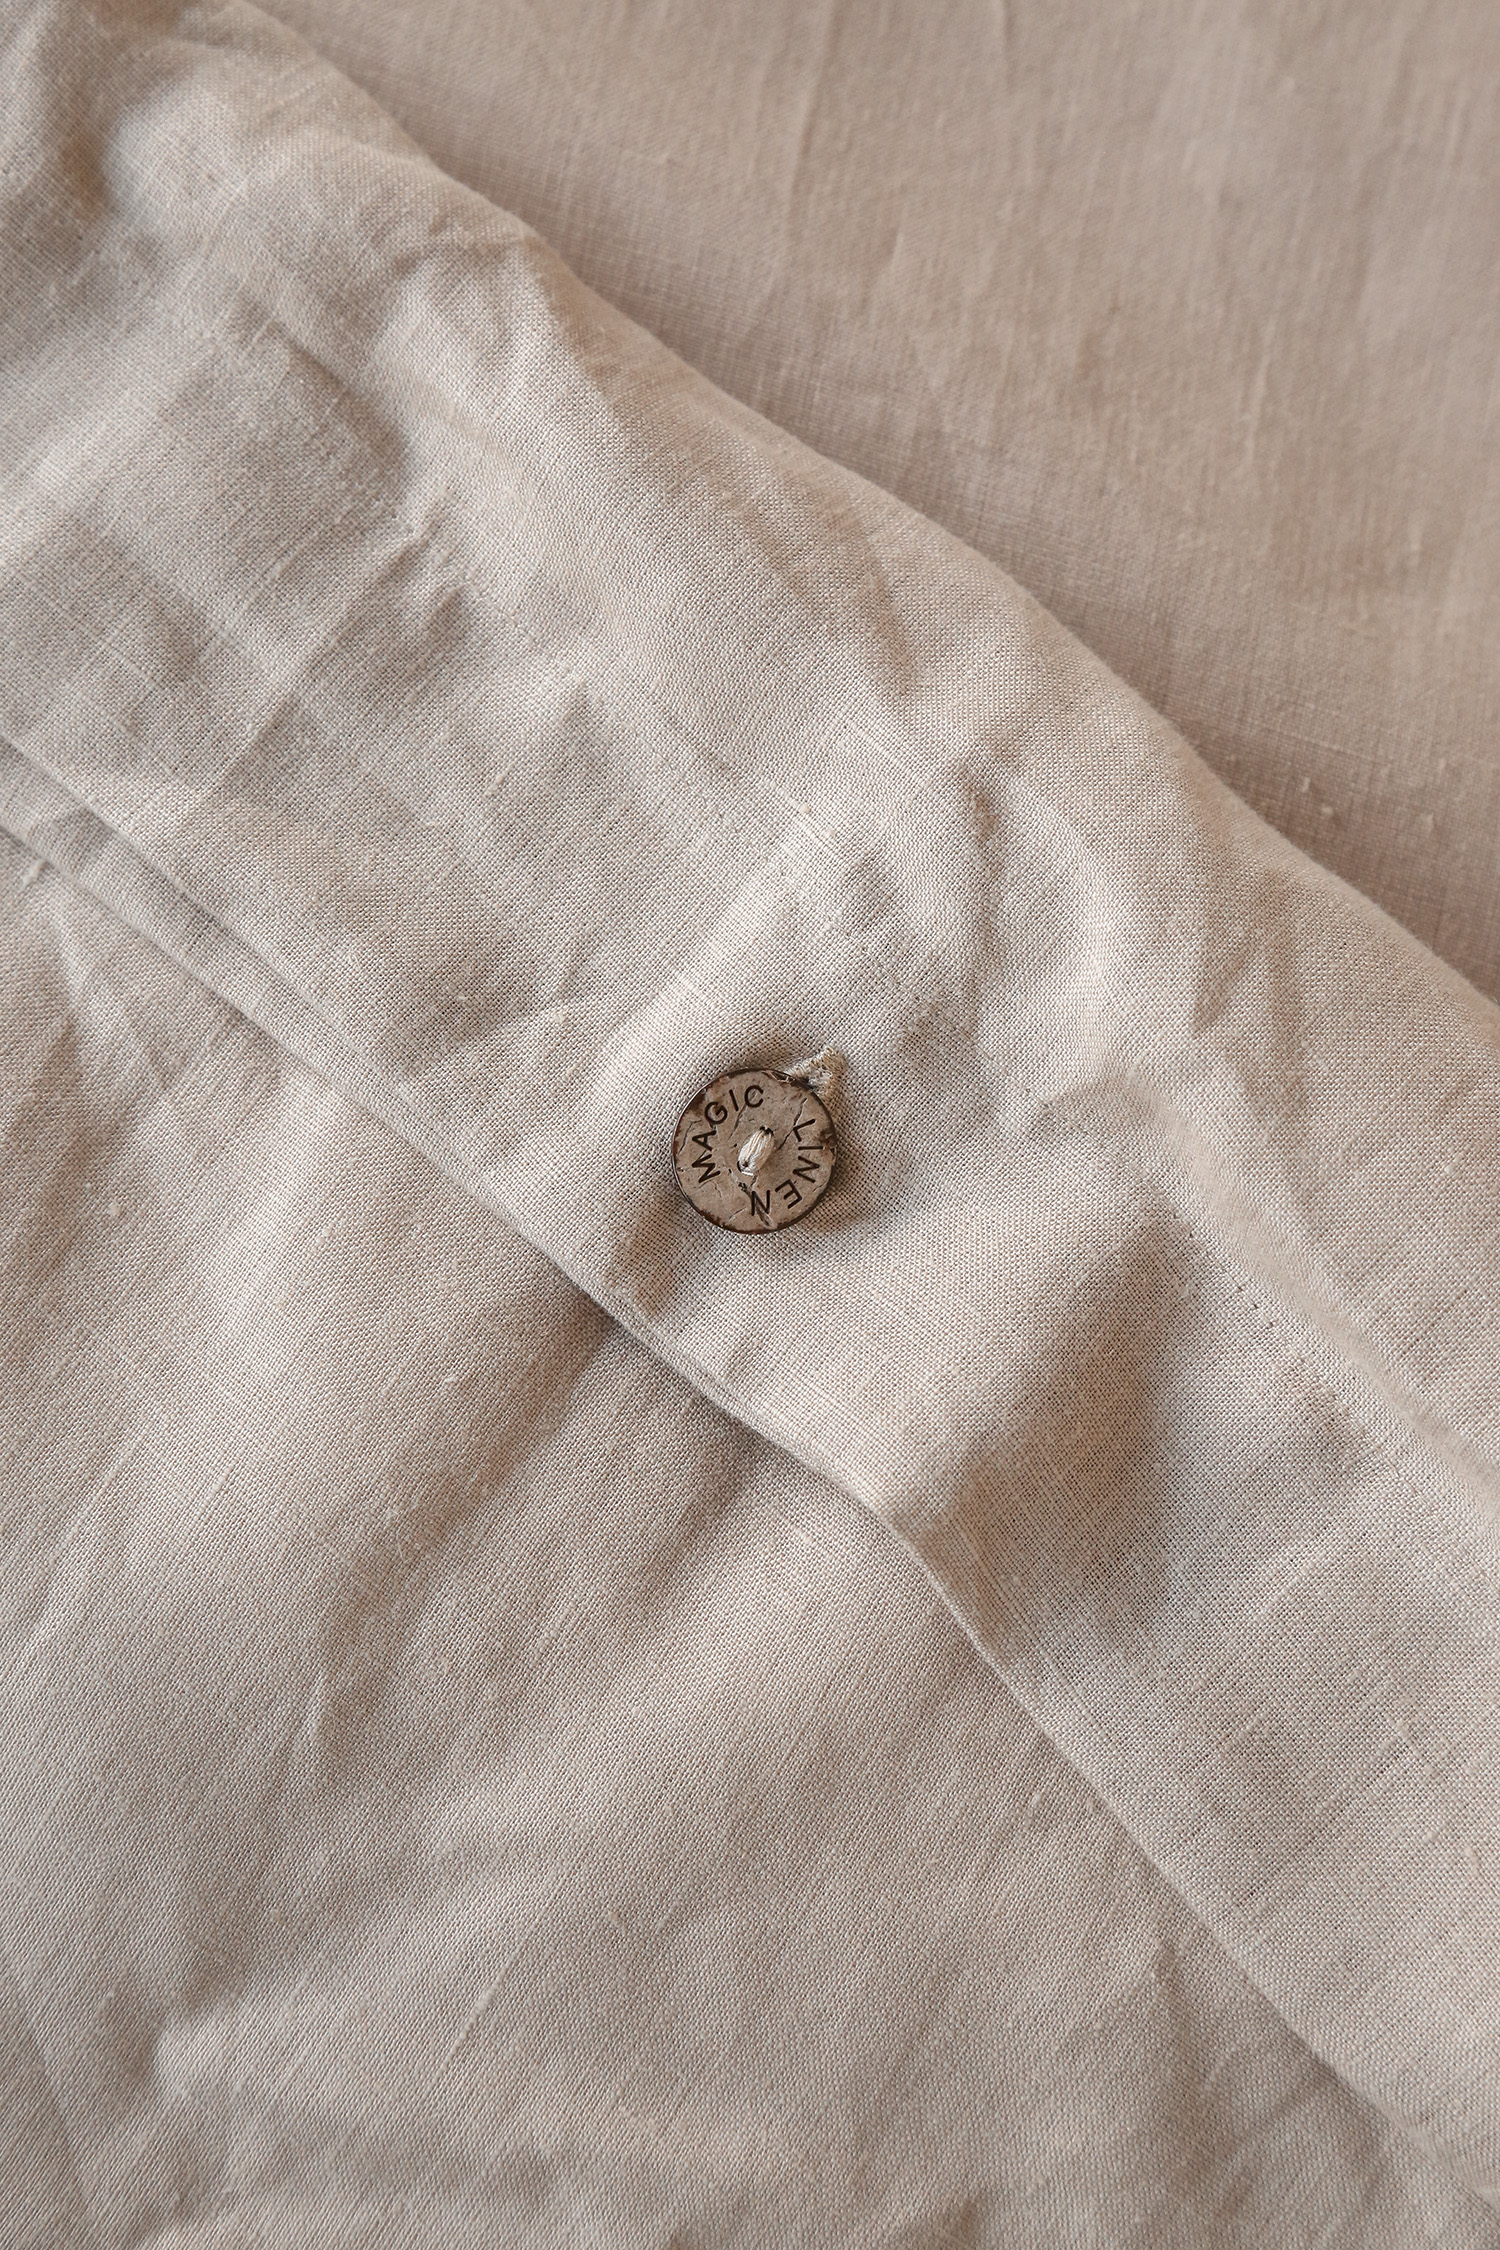 Stonewashed Linen Duvet button closure